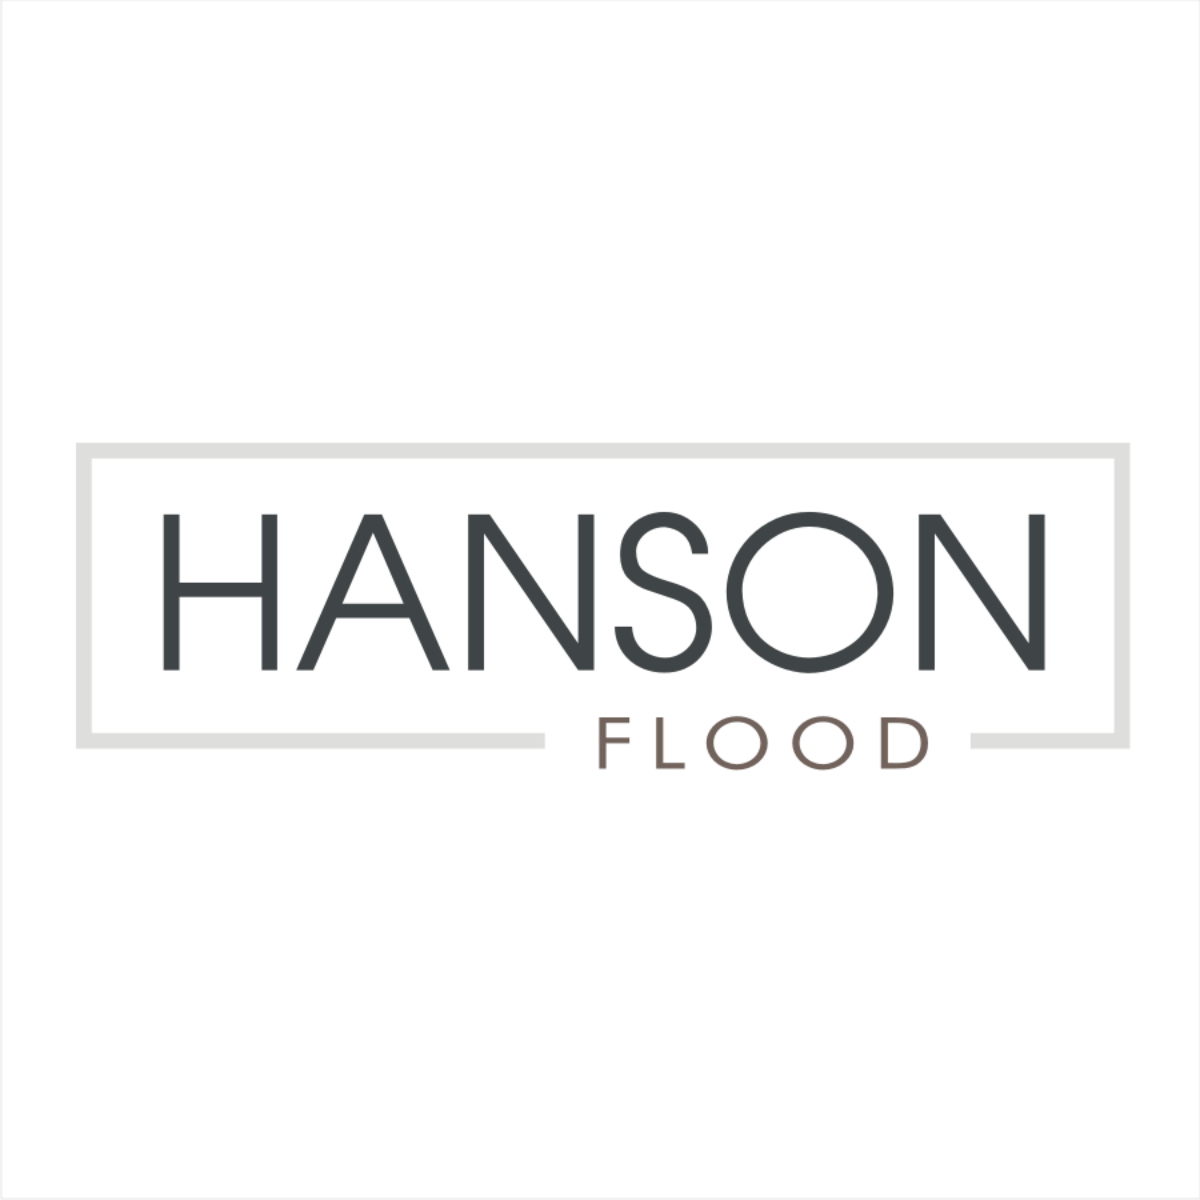 HANSON flood